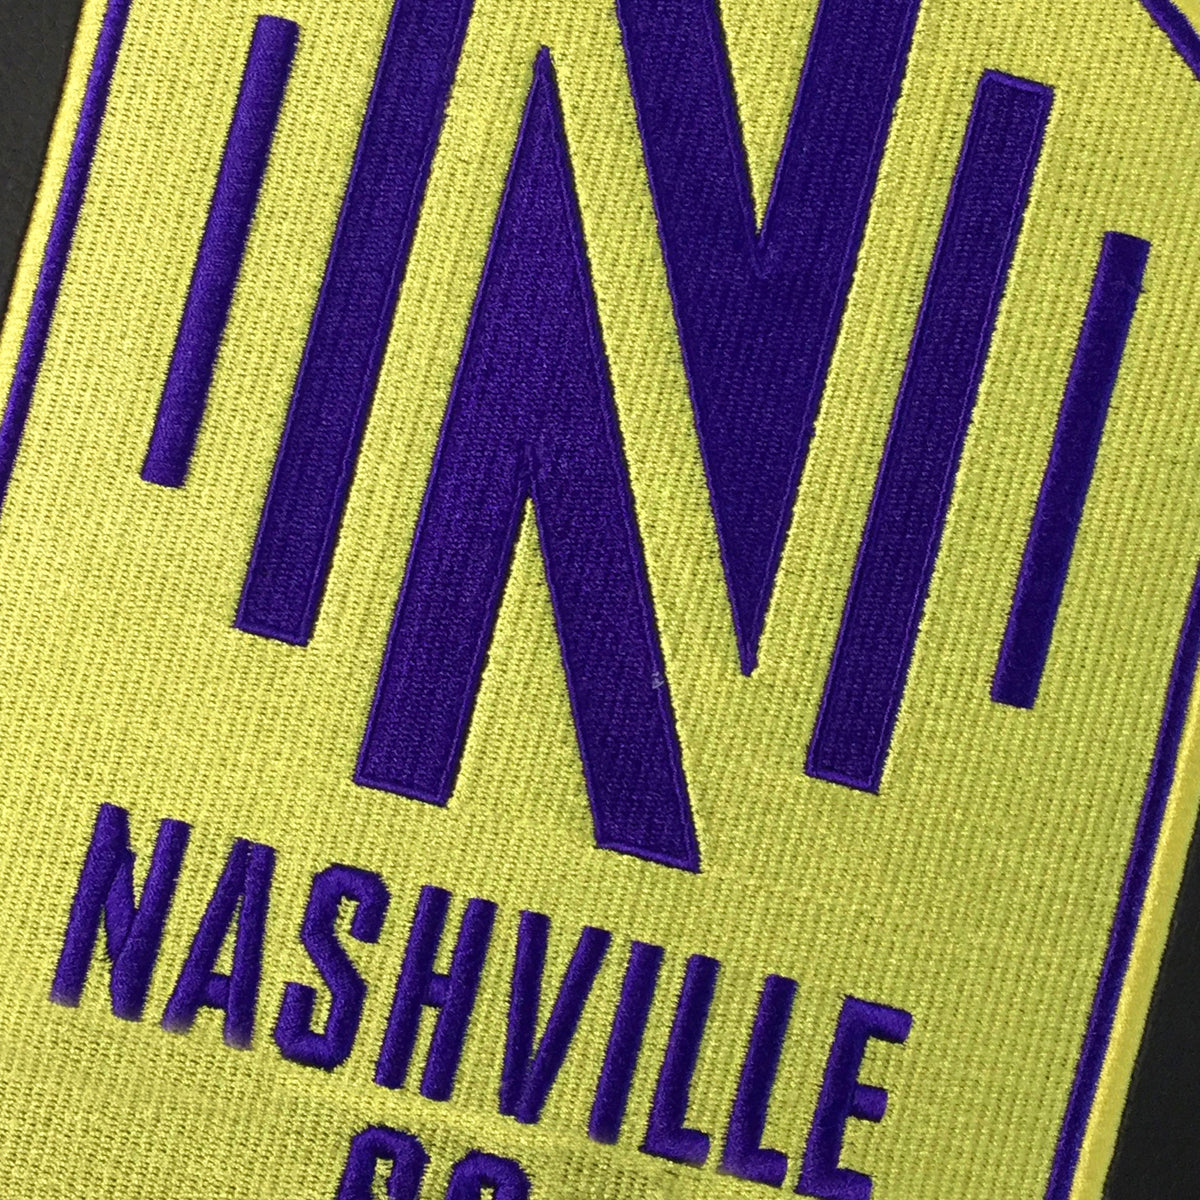 Swivel Bar Stool 2000 with Nashville SC Logo